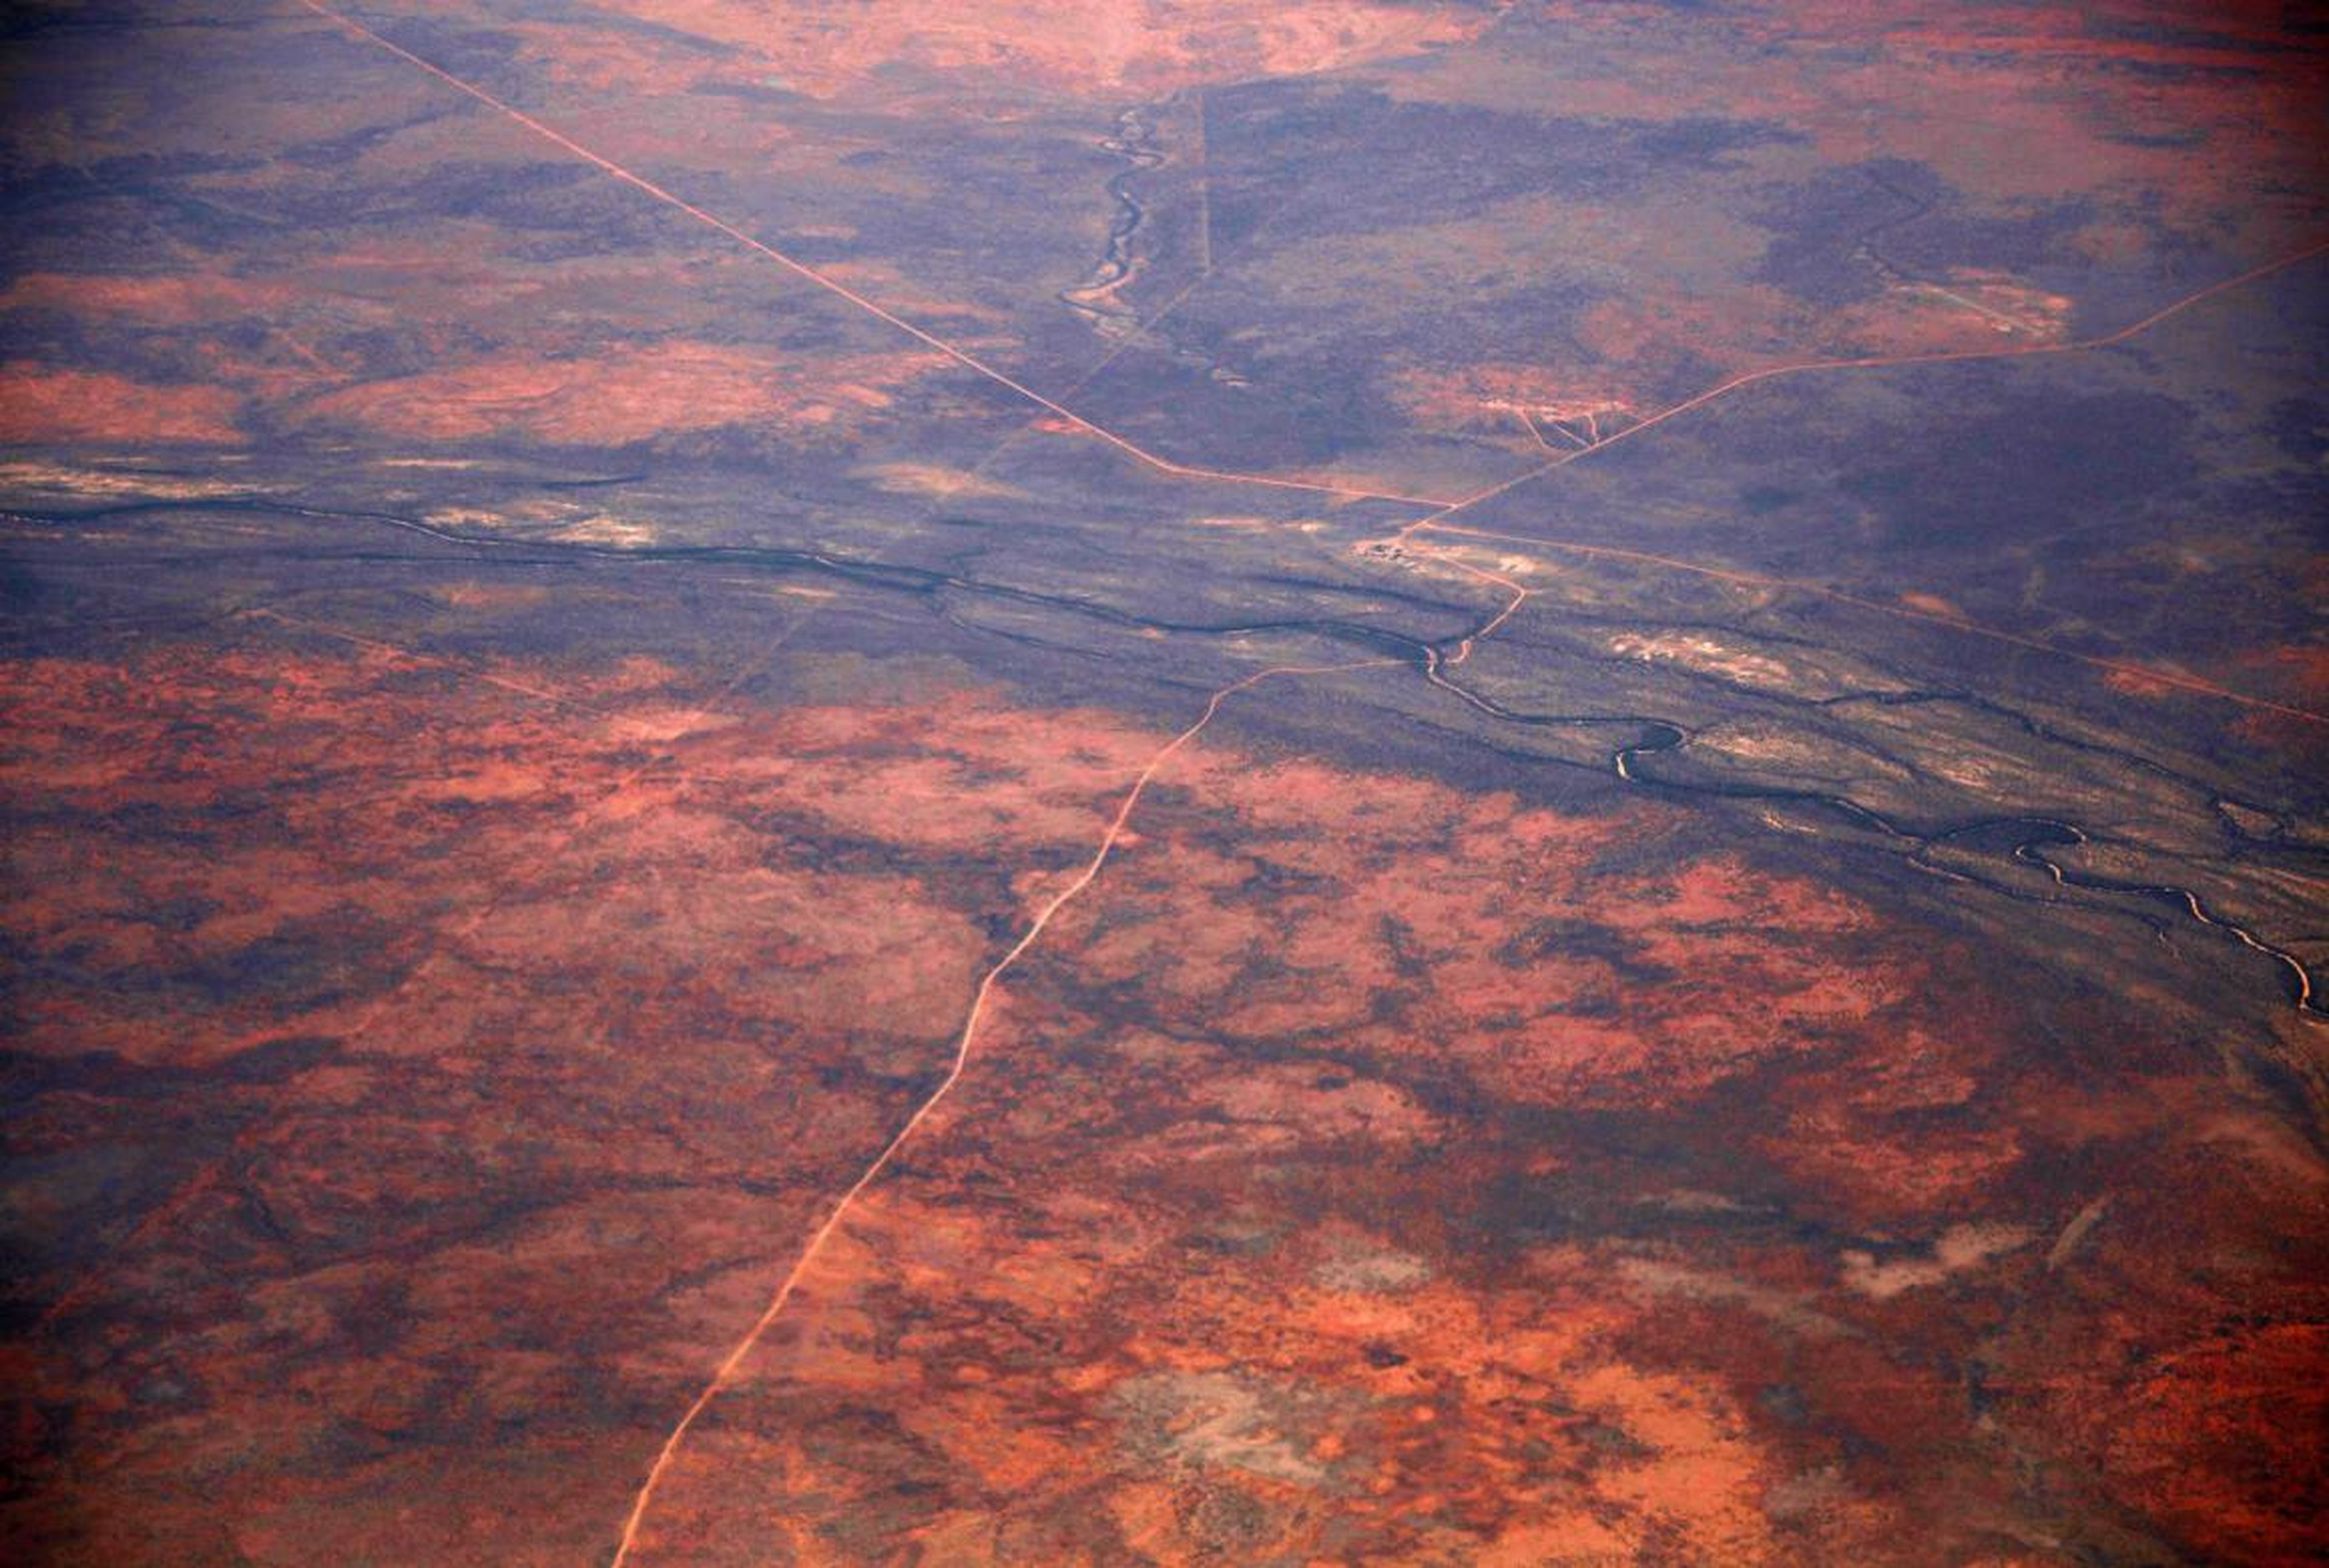 The Tanami Desert in Australia's Northern Territory.